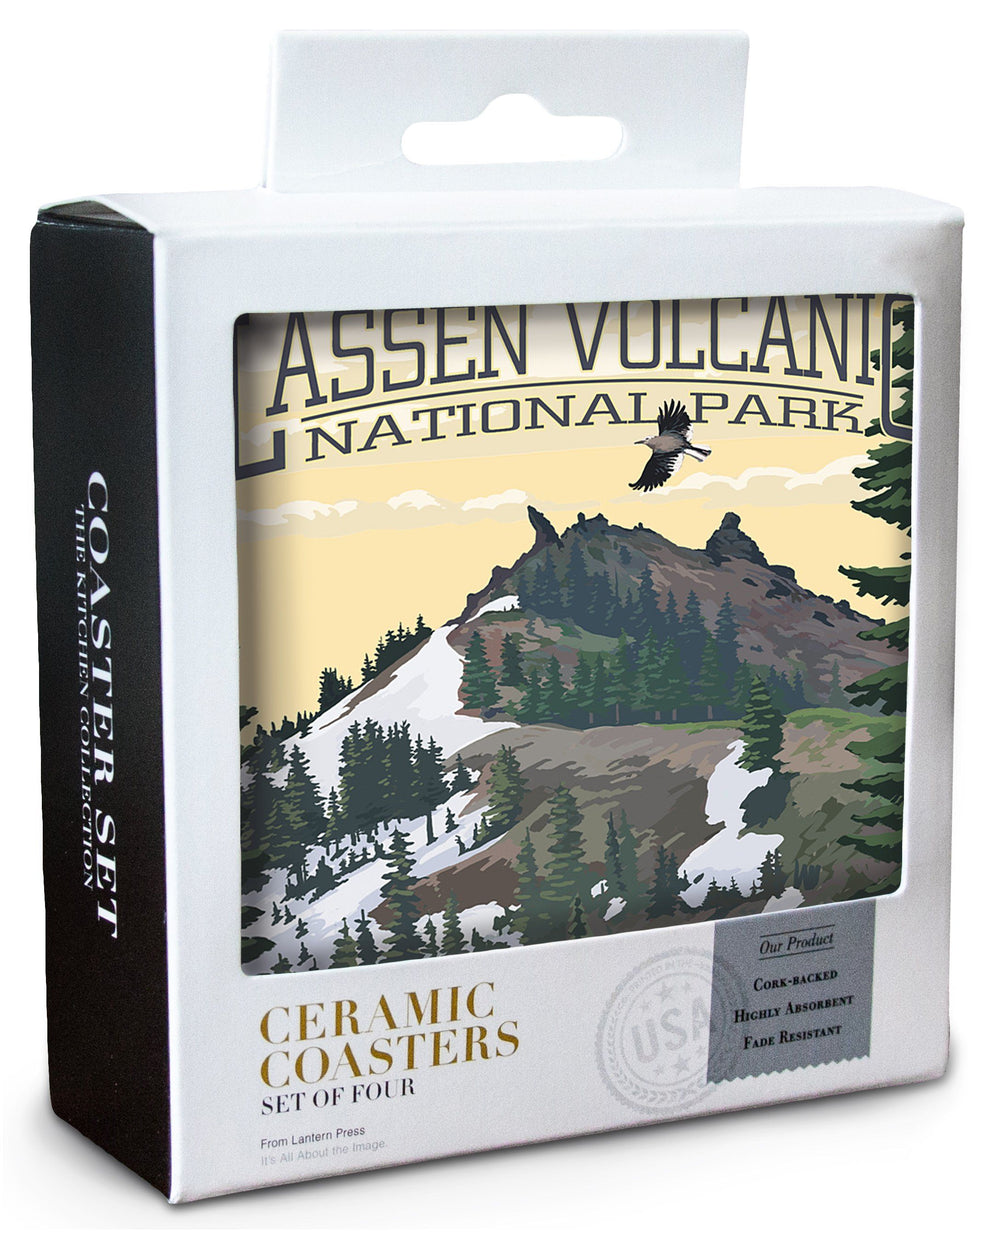 Lassen Volcanic National Park, California, Diamond Peak, Lantern Press Artwork, Coaster Set Coasters Lantern Press 